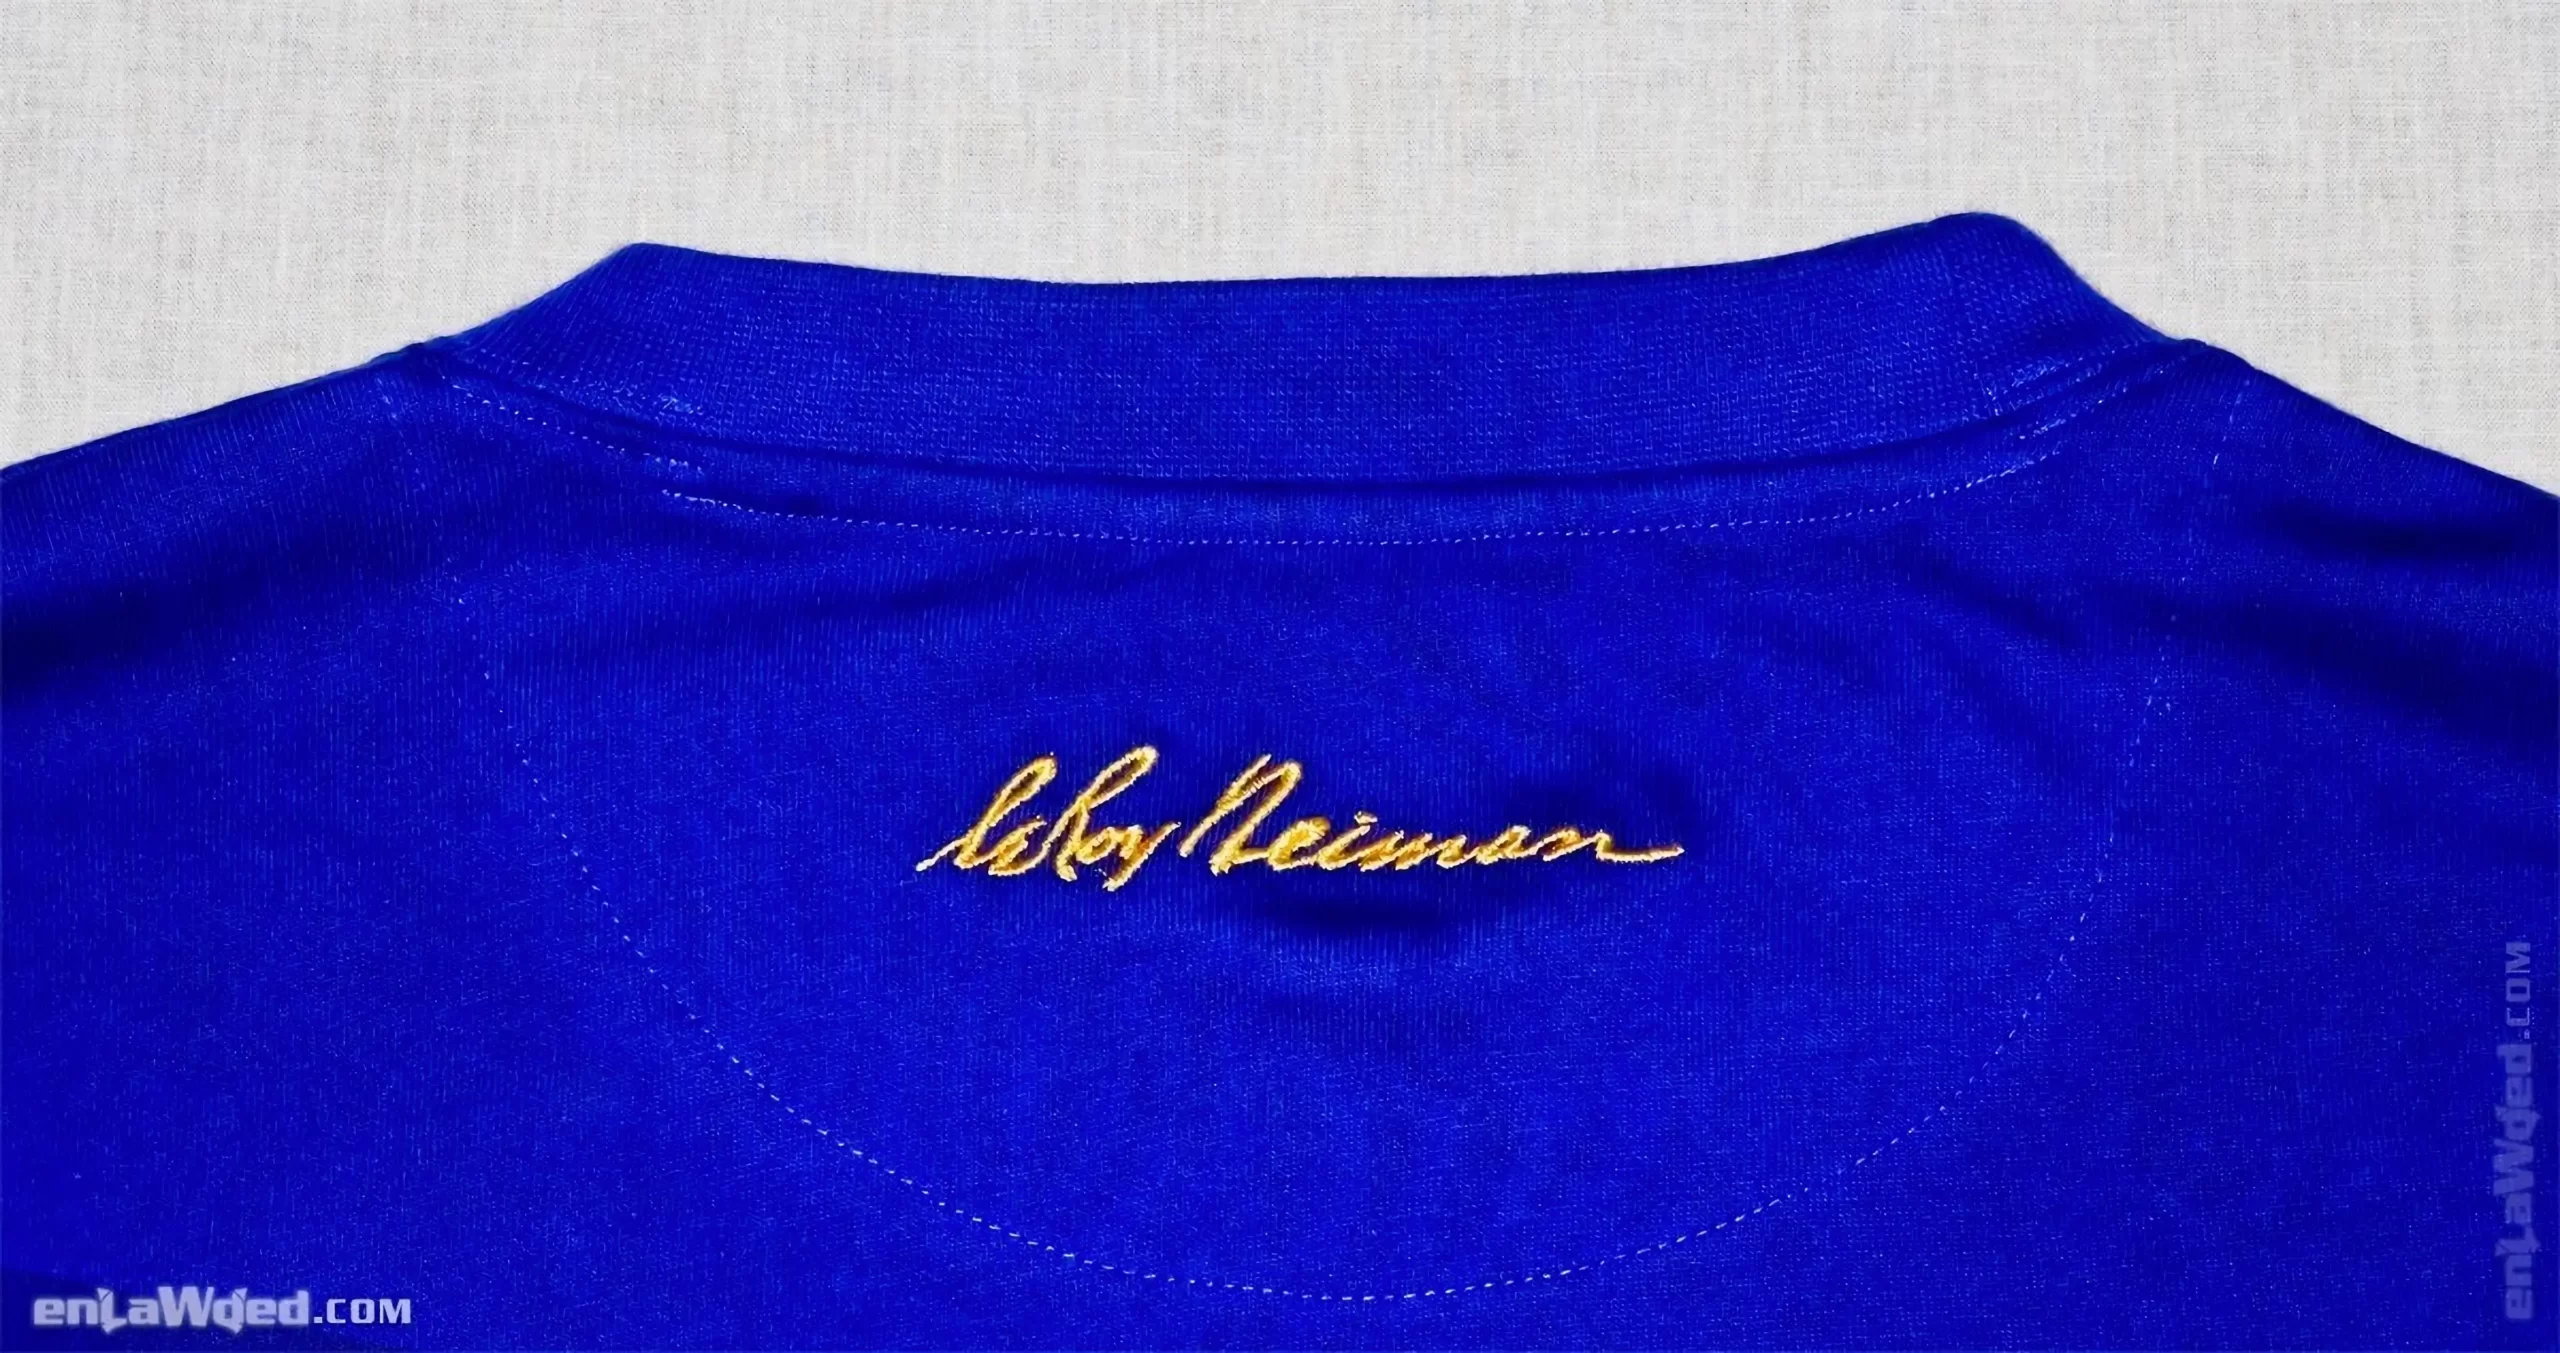 Men’s 2007 Muhammad Ali Respect T-Shirt by Adidas: Tawdry (EnLawded.com file #lmc5riqr3bx1qz9j4r2)